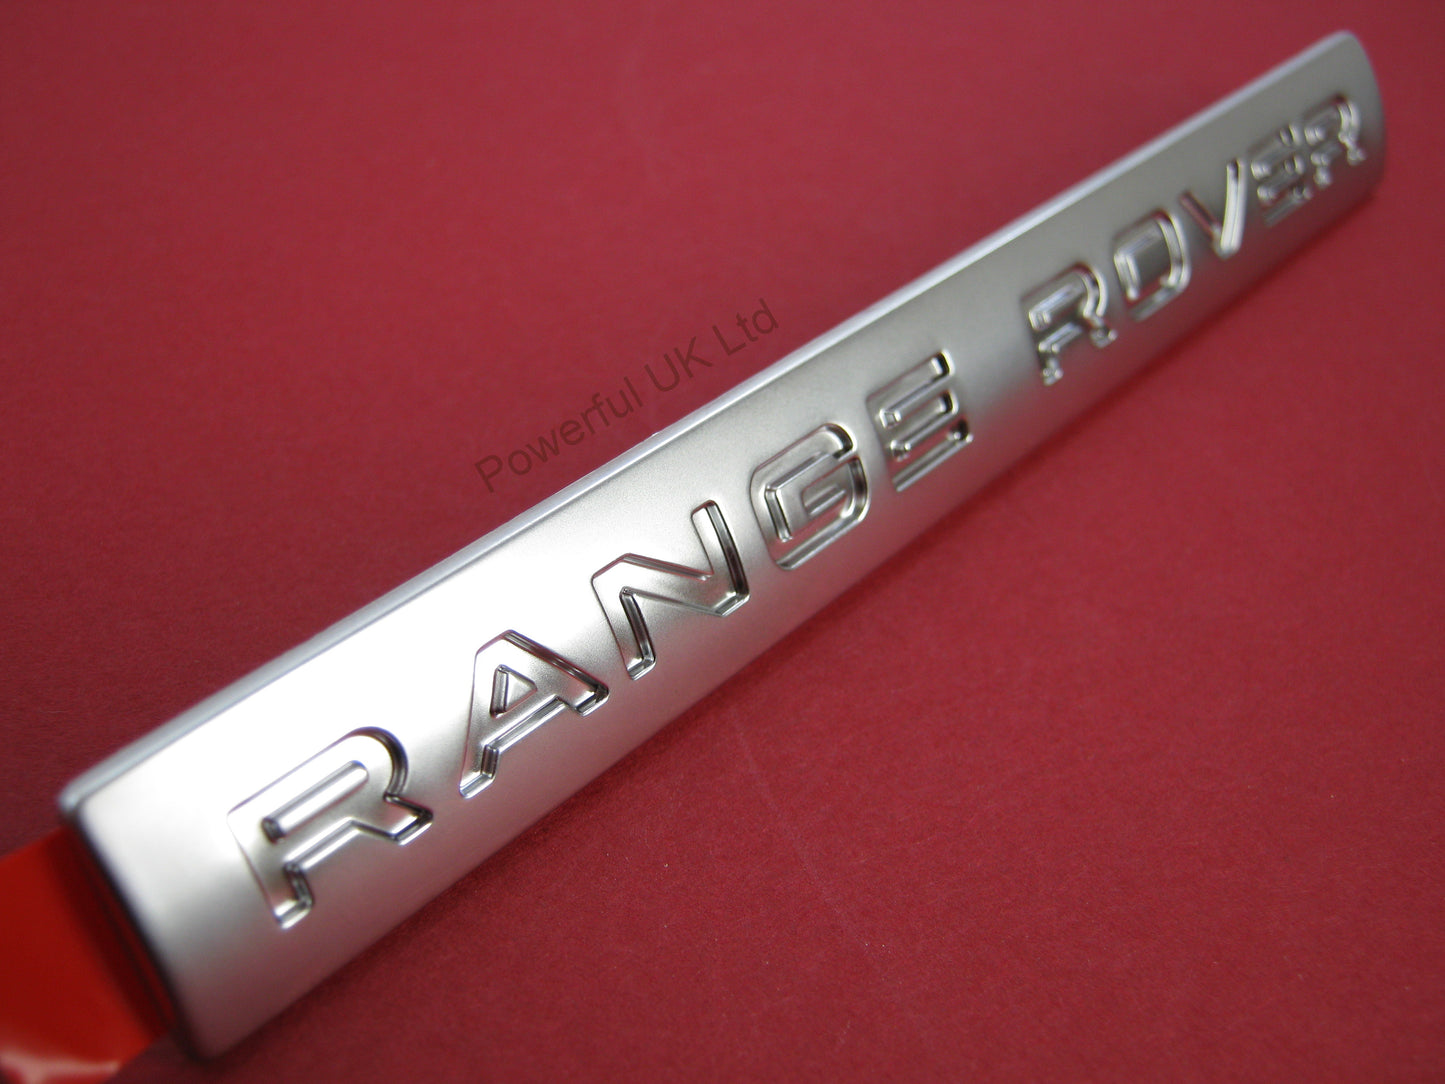 Interior Dash Badge for Range Rover L322